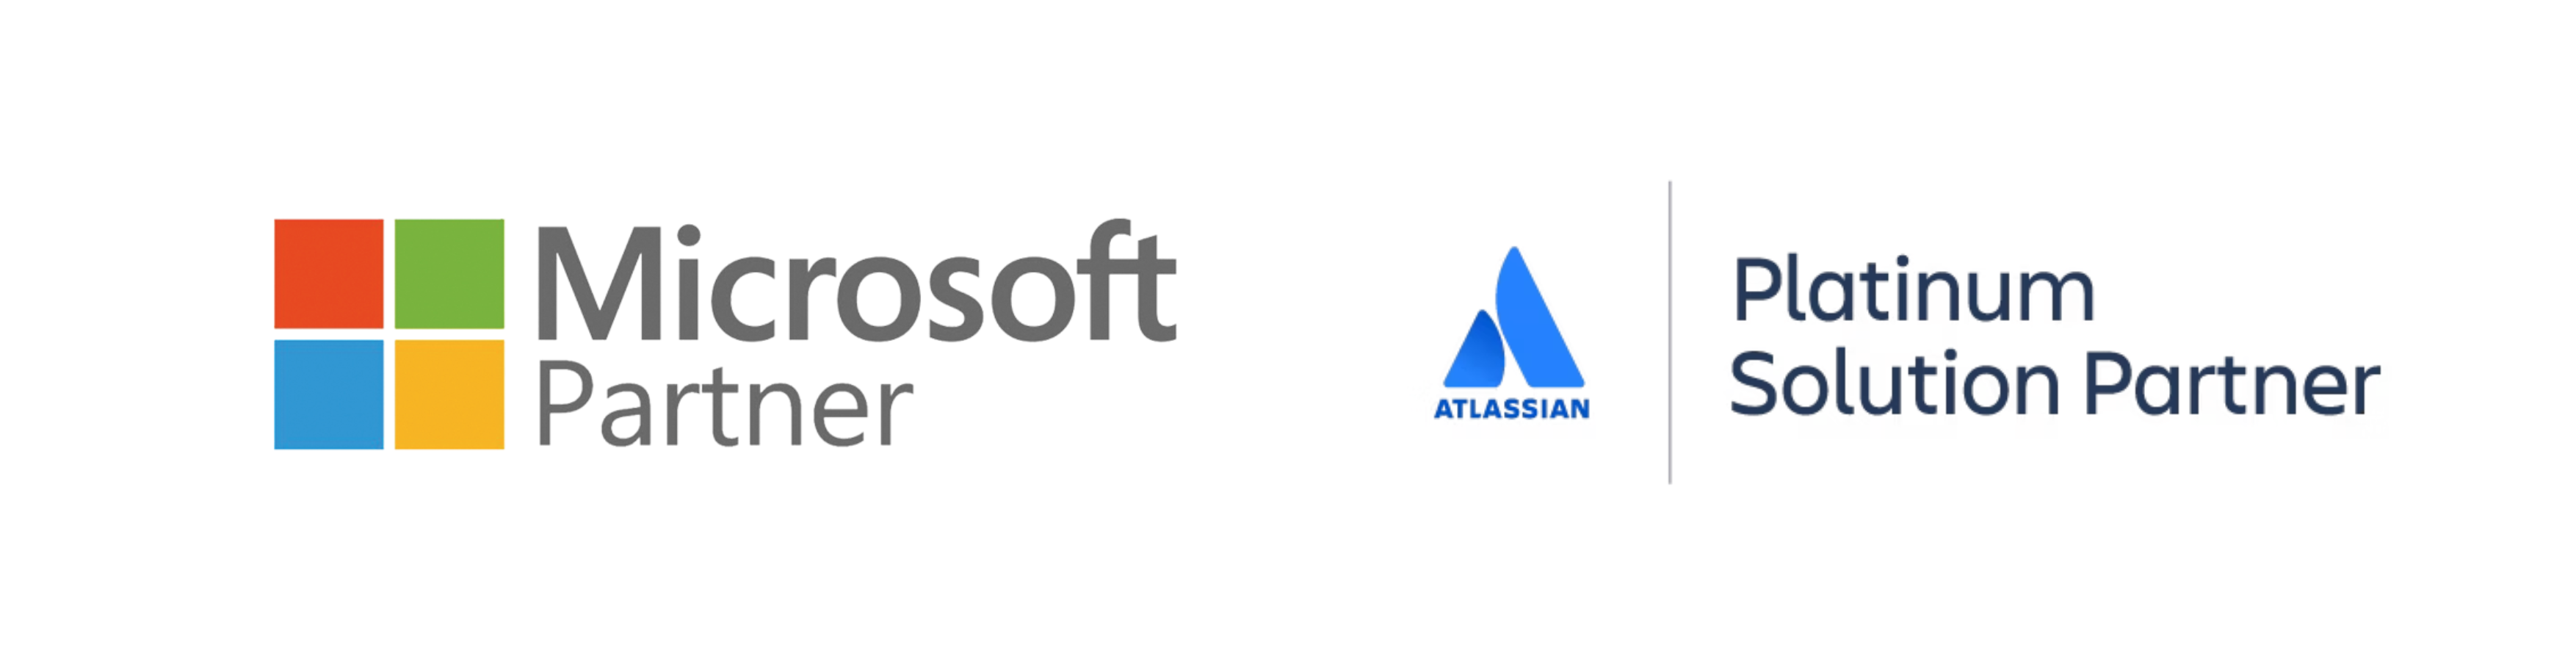 Microsoft partner and atlassian platinum partner logo's